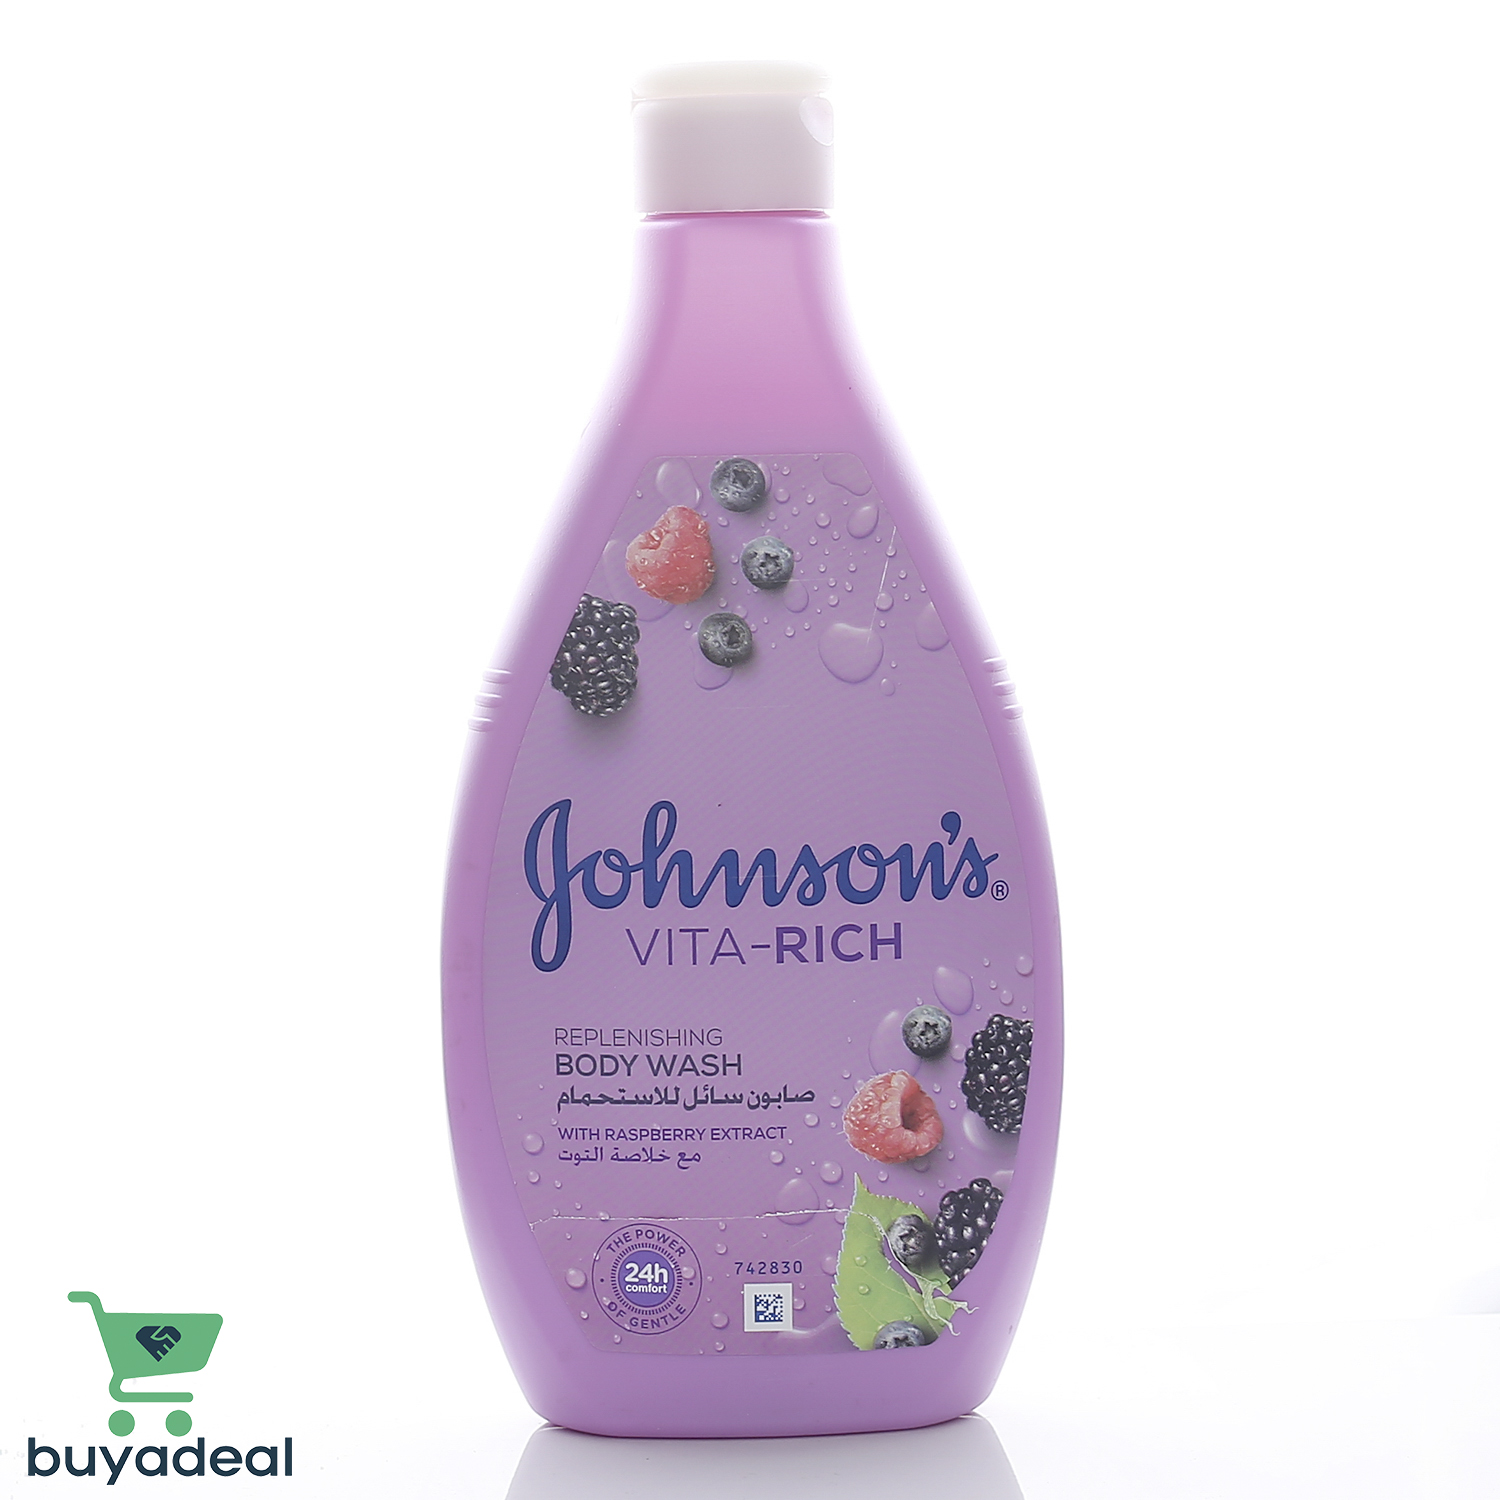 Buyadeal Product Johnson's Body Wash Vita-Rich Replenishing 250ml